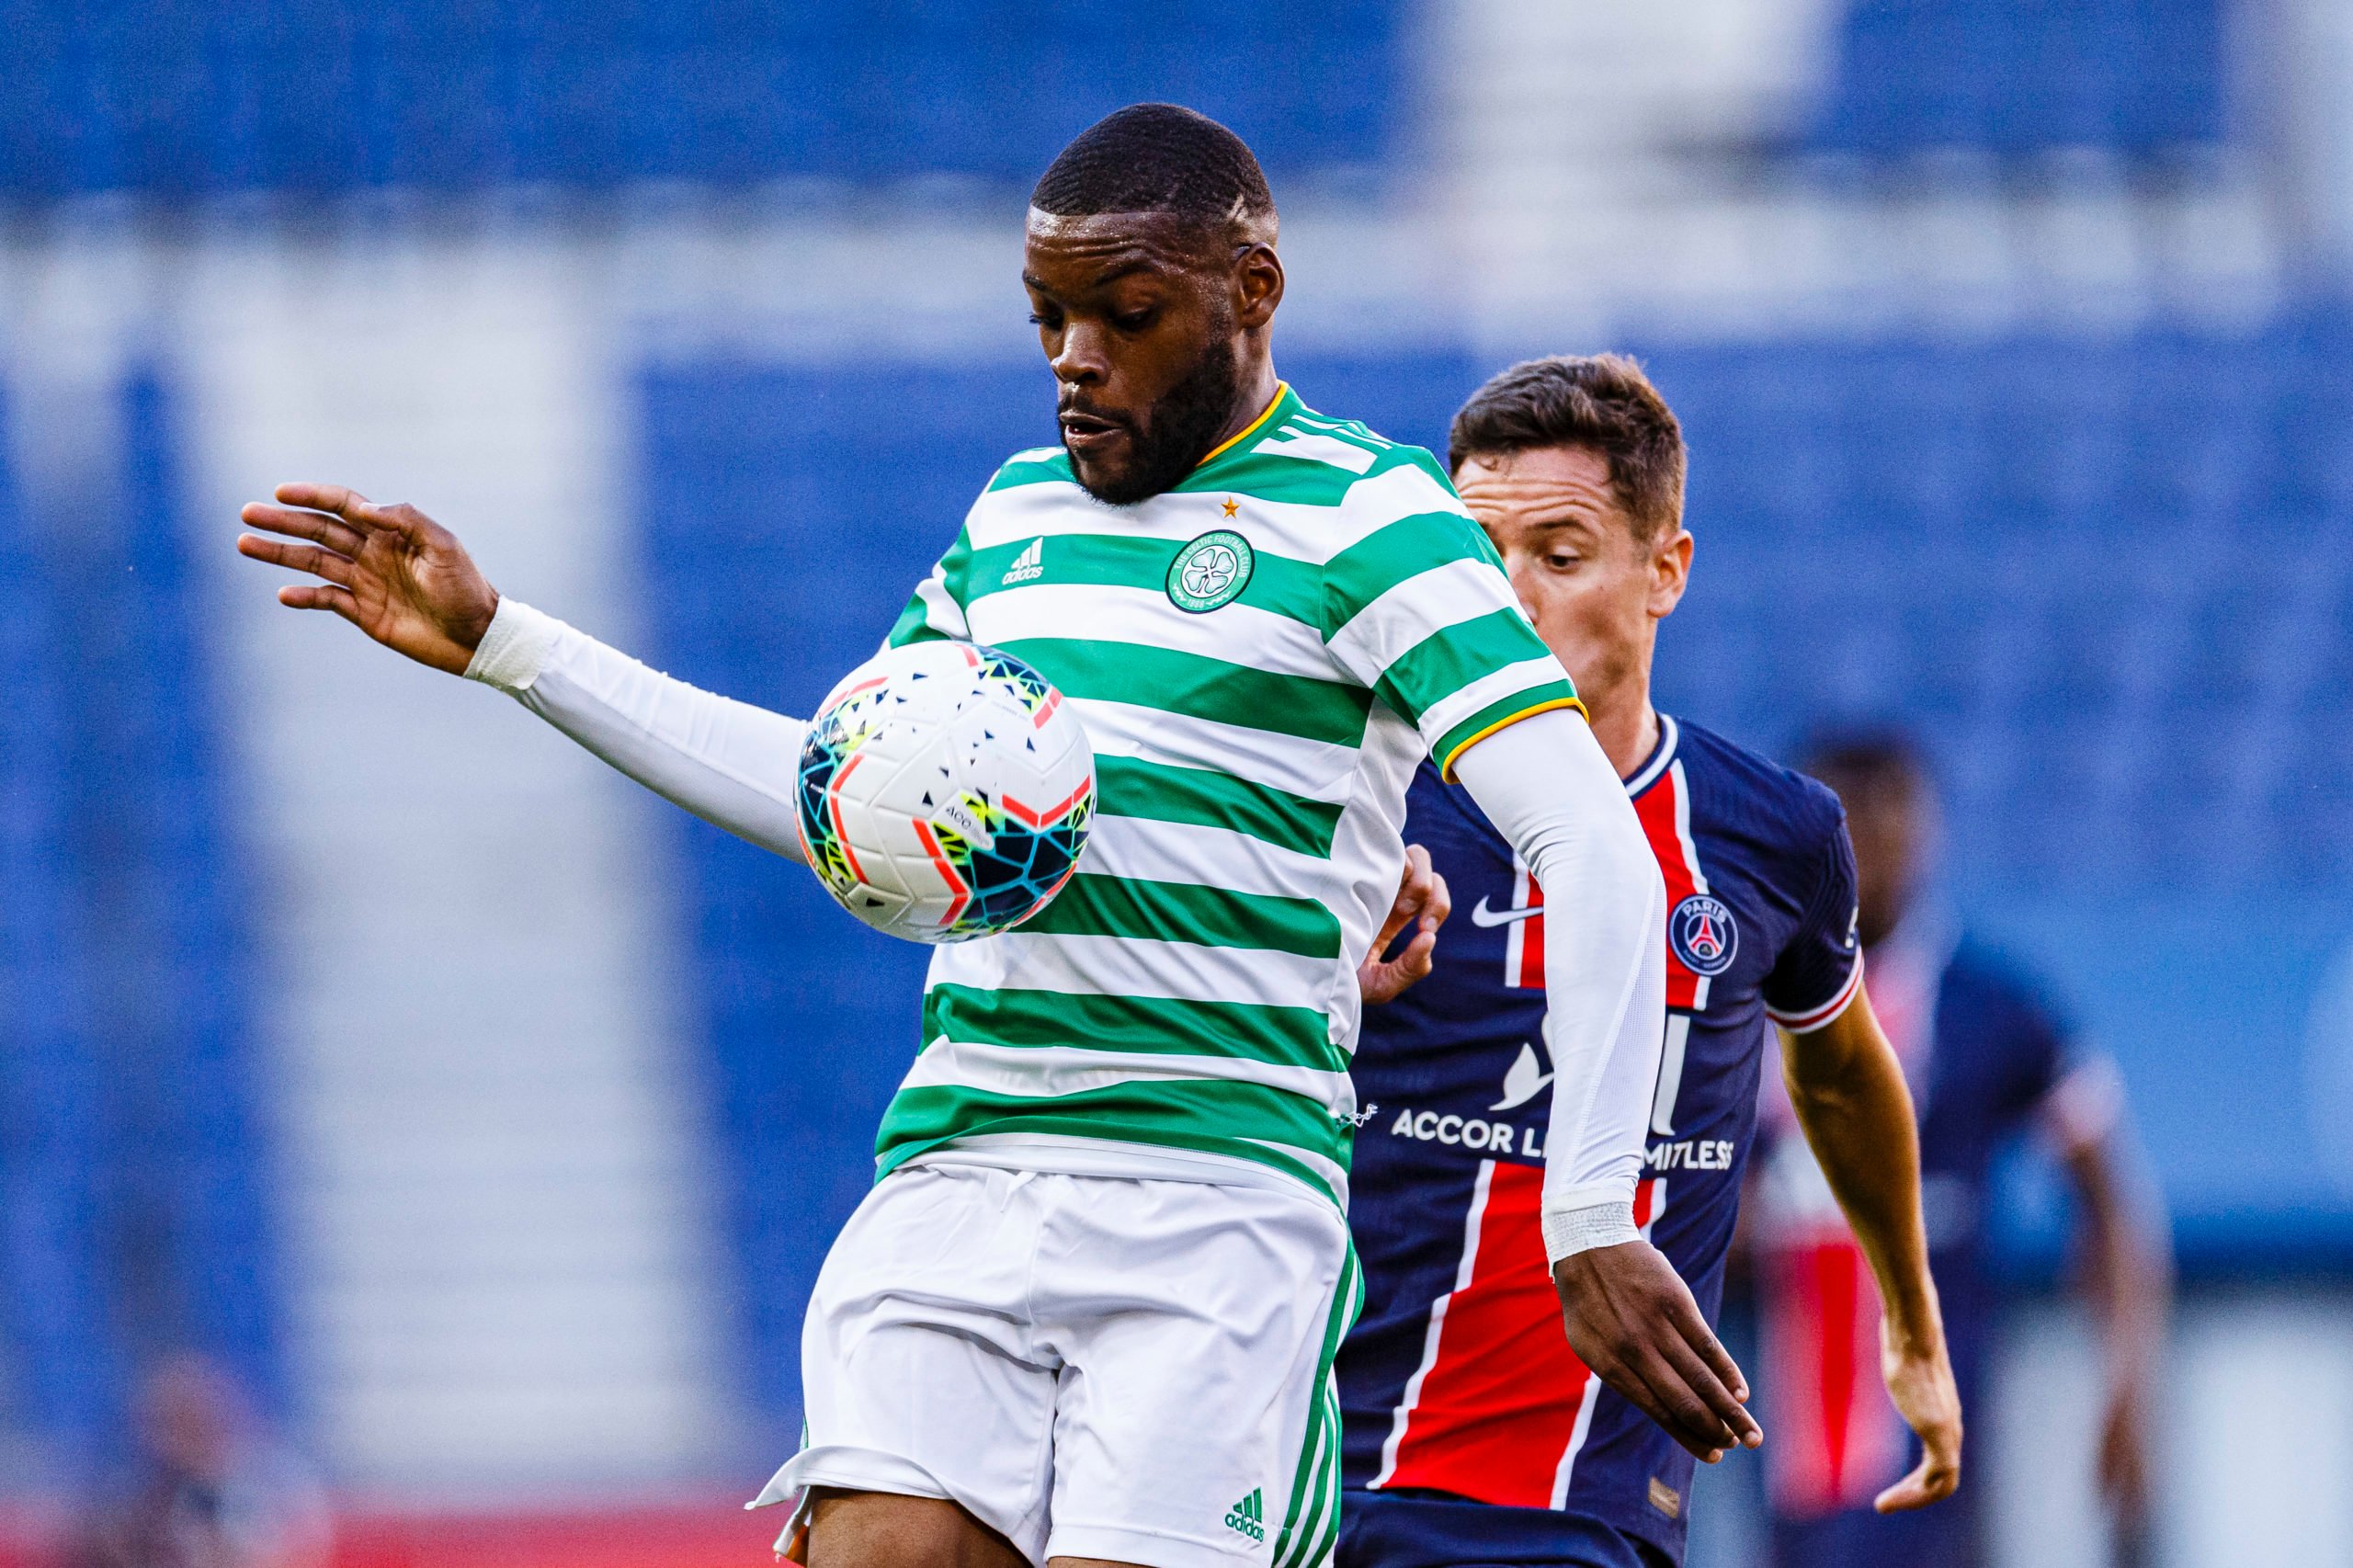 Olivier Ntcham in action for Celtic